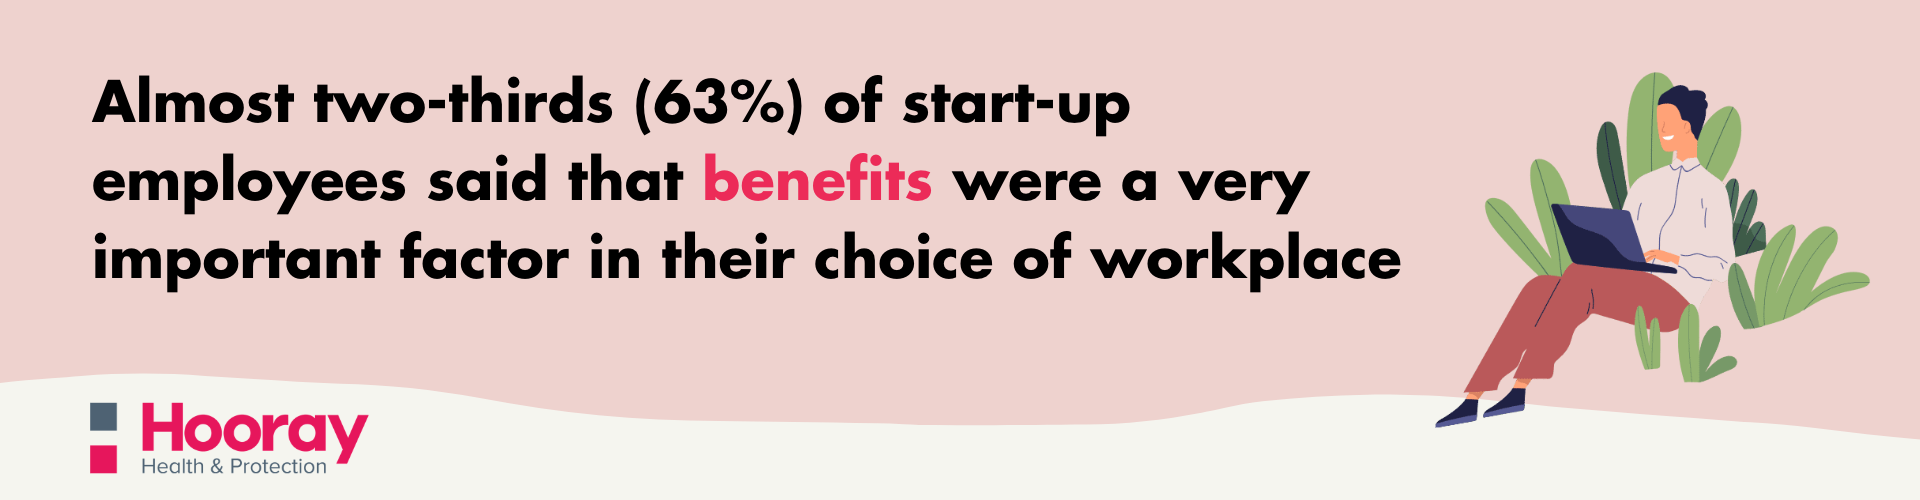 Start-ups employee benefits 